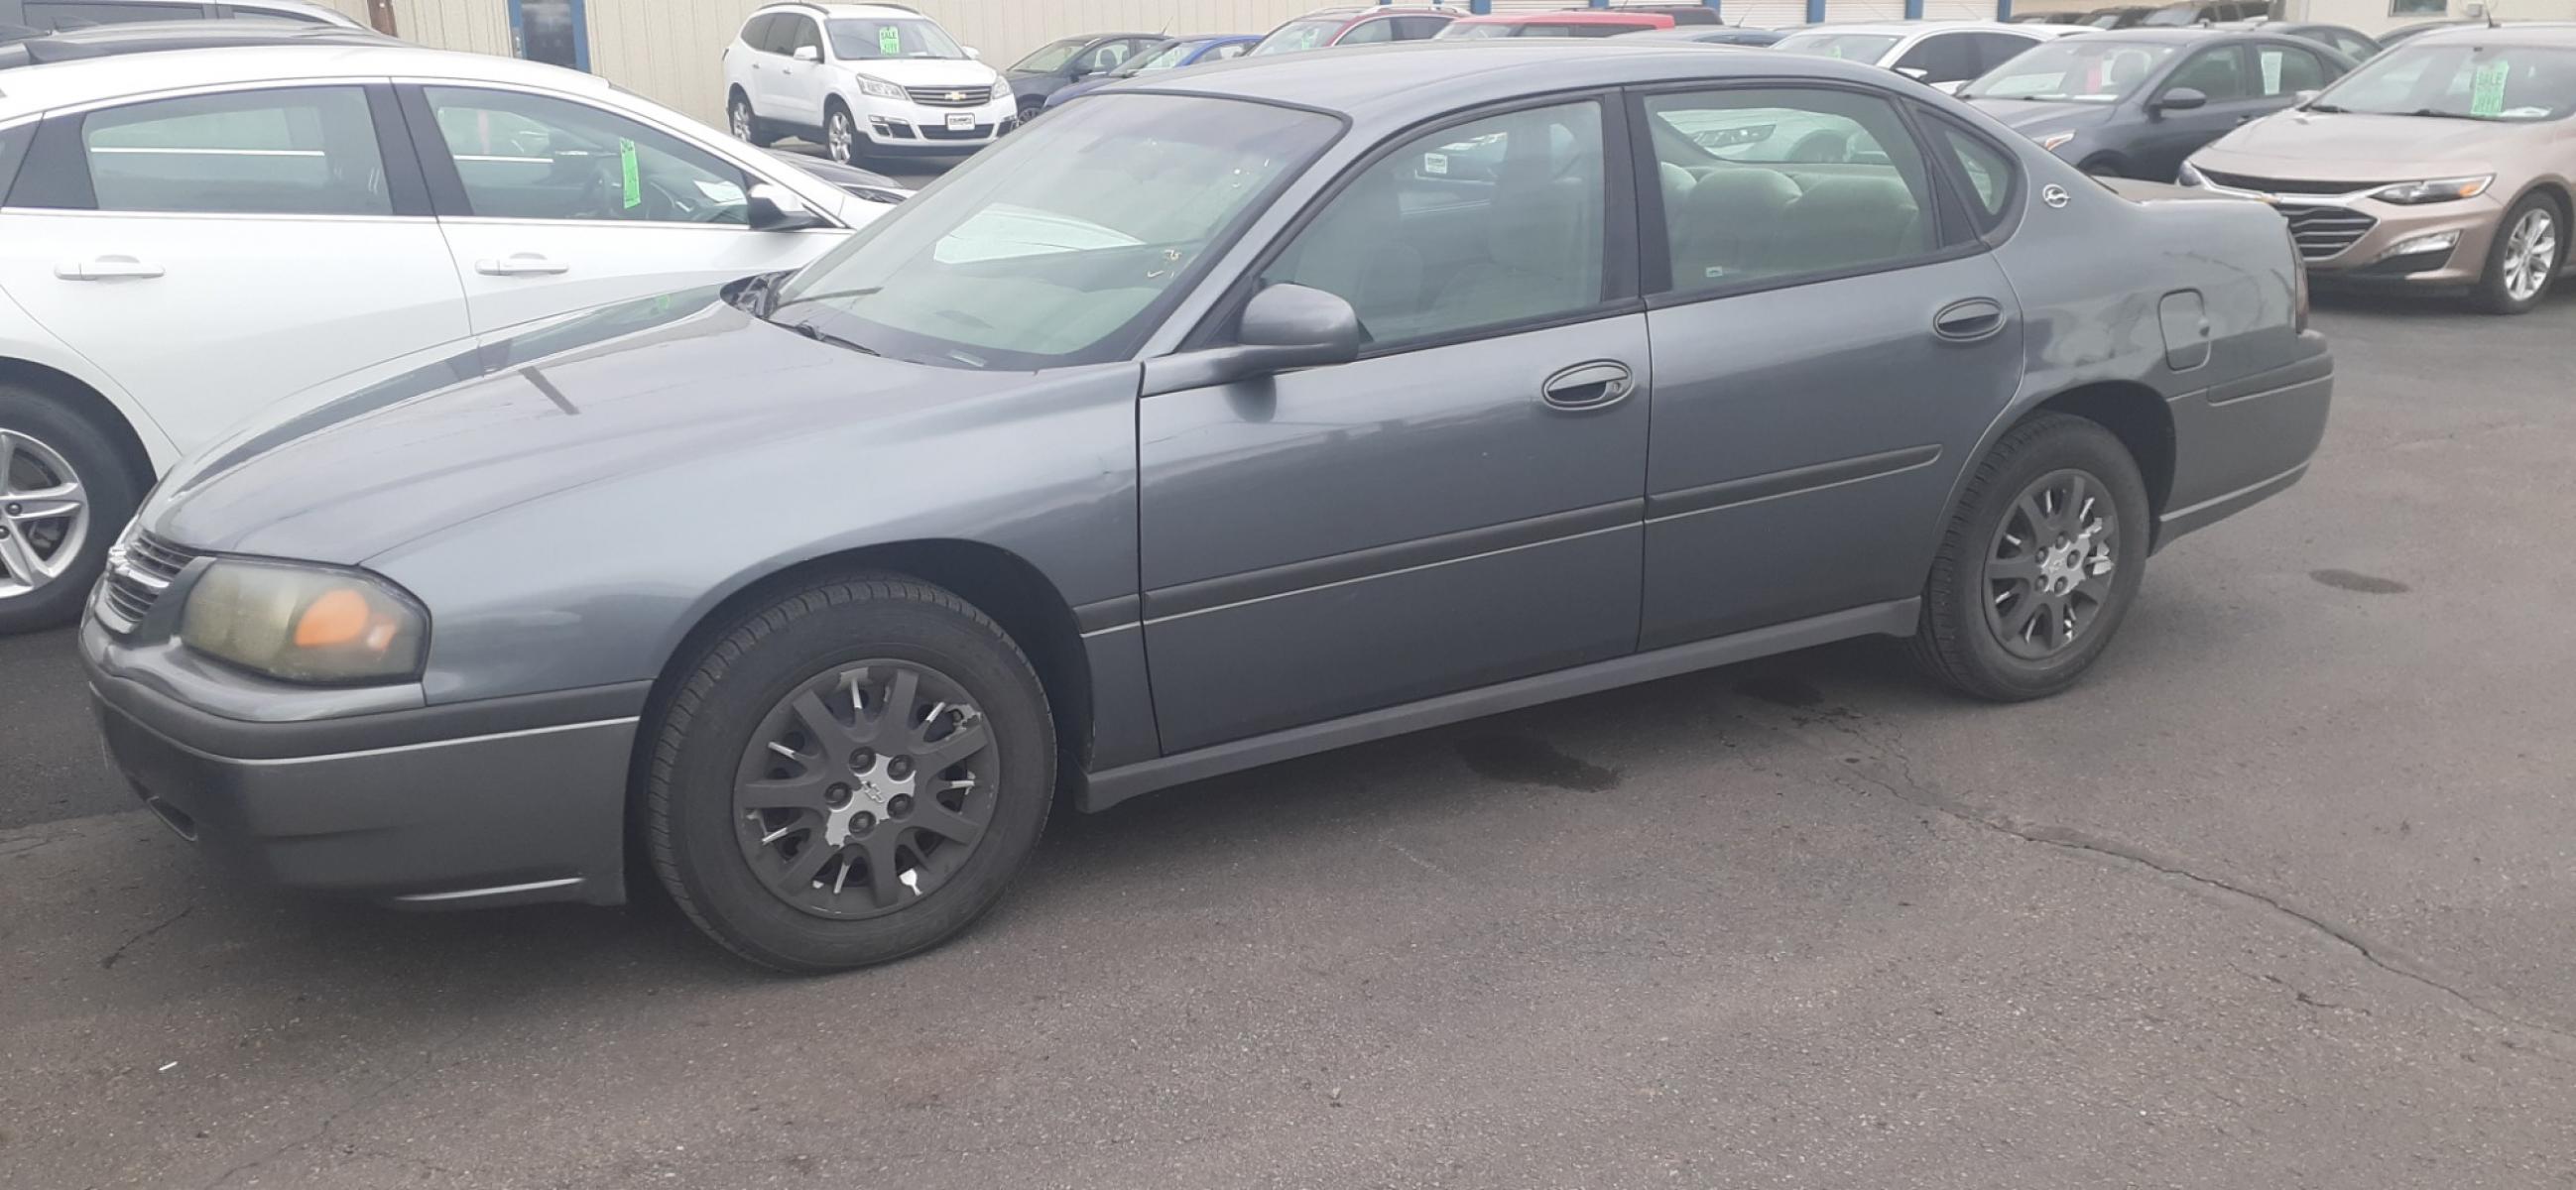 2005 Chevrolet Impala (2G1WF52E959) , located at 2015 Cambell Street, Rapid City, SD, 57701, (605) 342-8326, 44.066433, -103.191772 - Photo #1